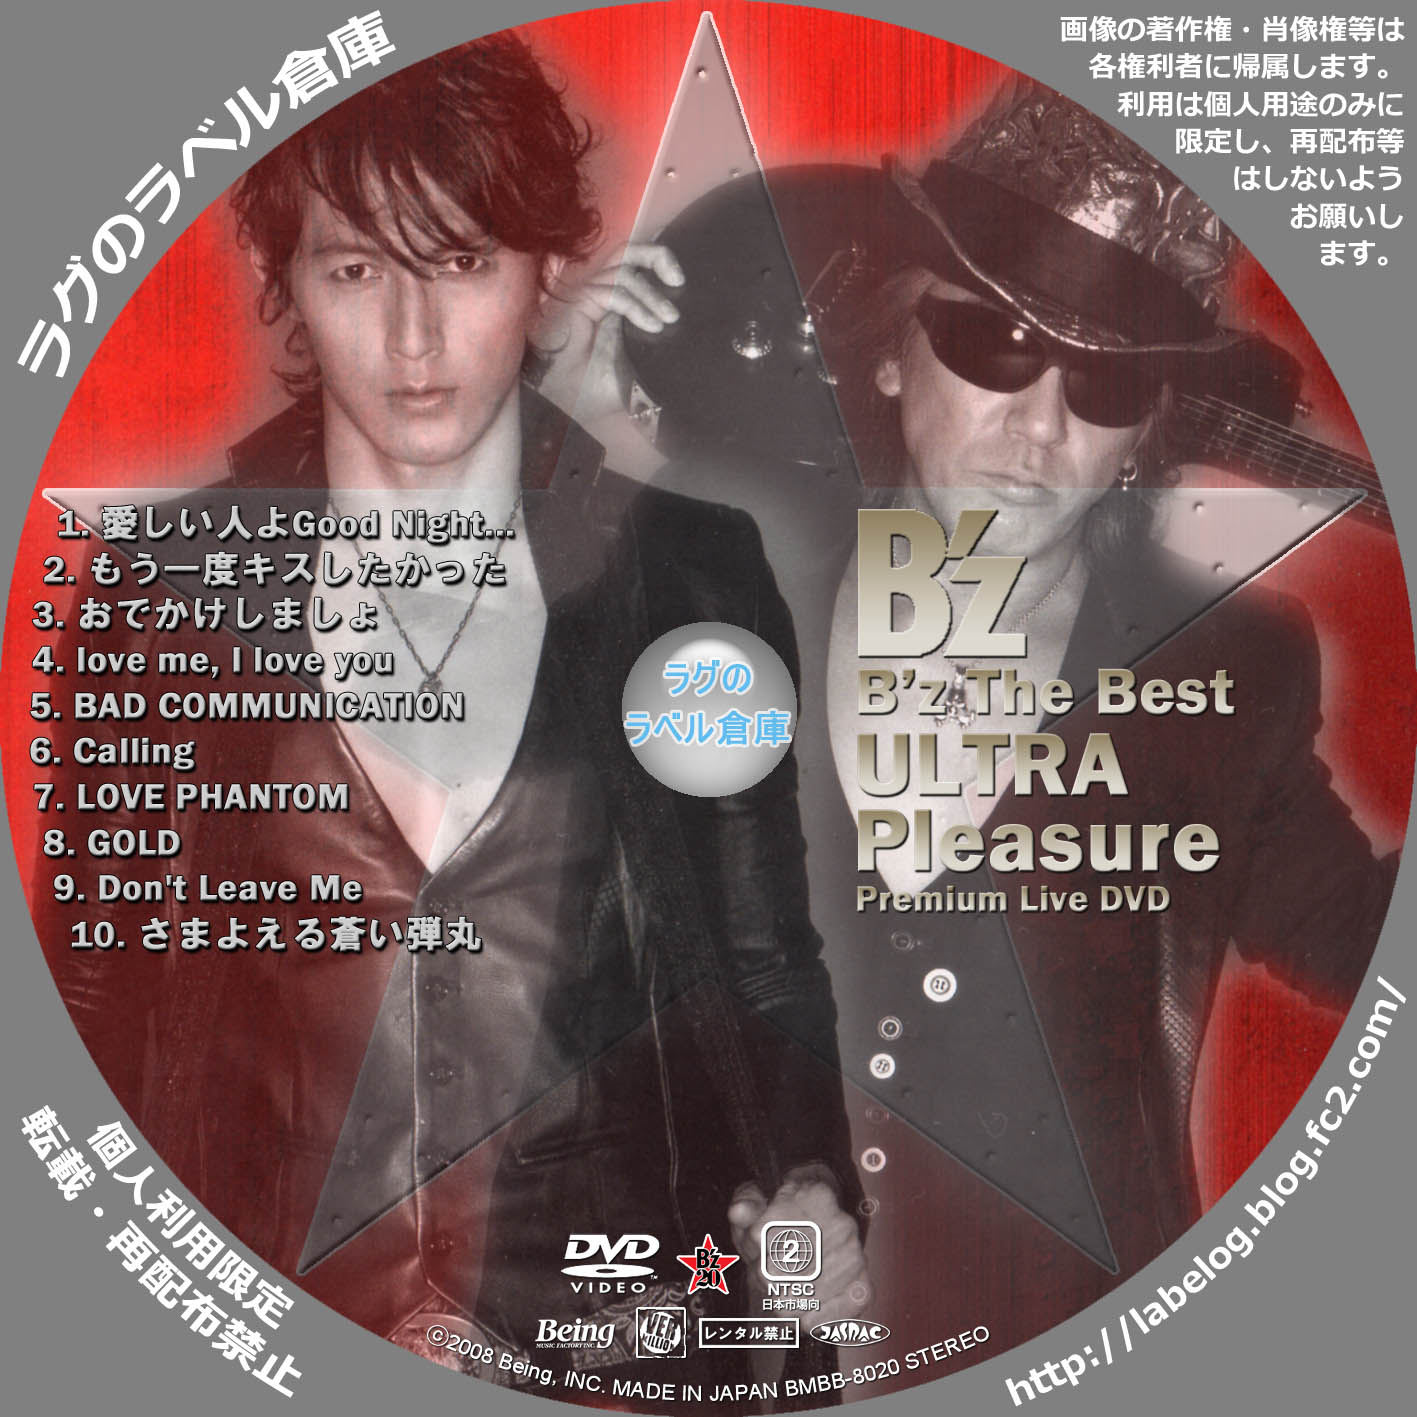 B'z The Best “ULTRA Pleasure” | ラグの CD / DVD / BD 自作ラベル倉庫